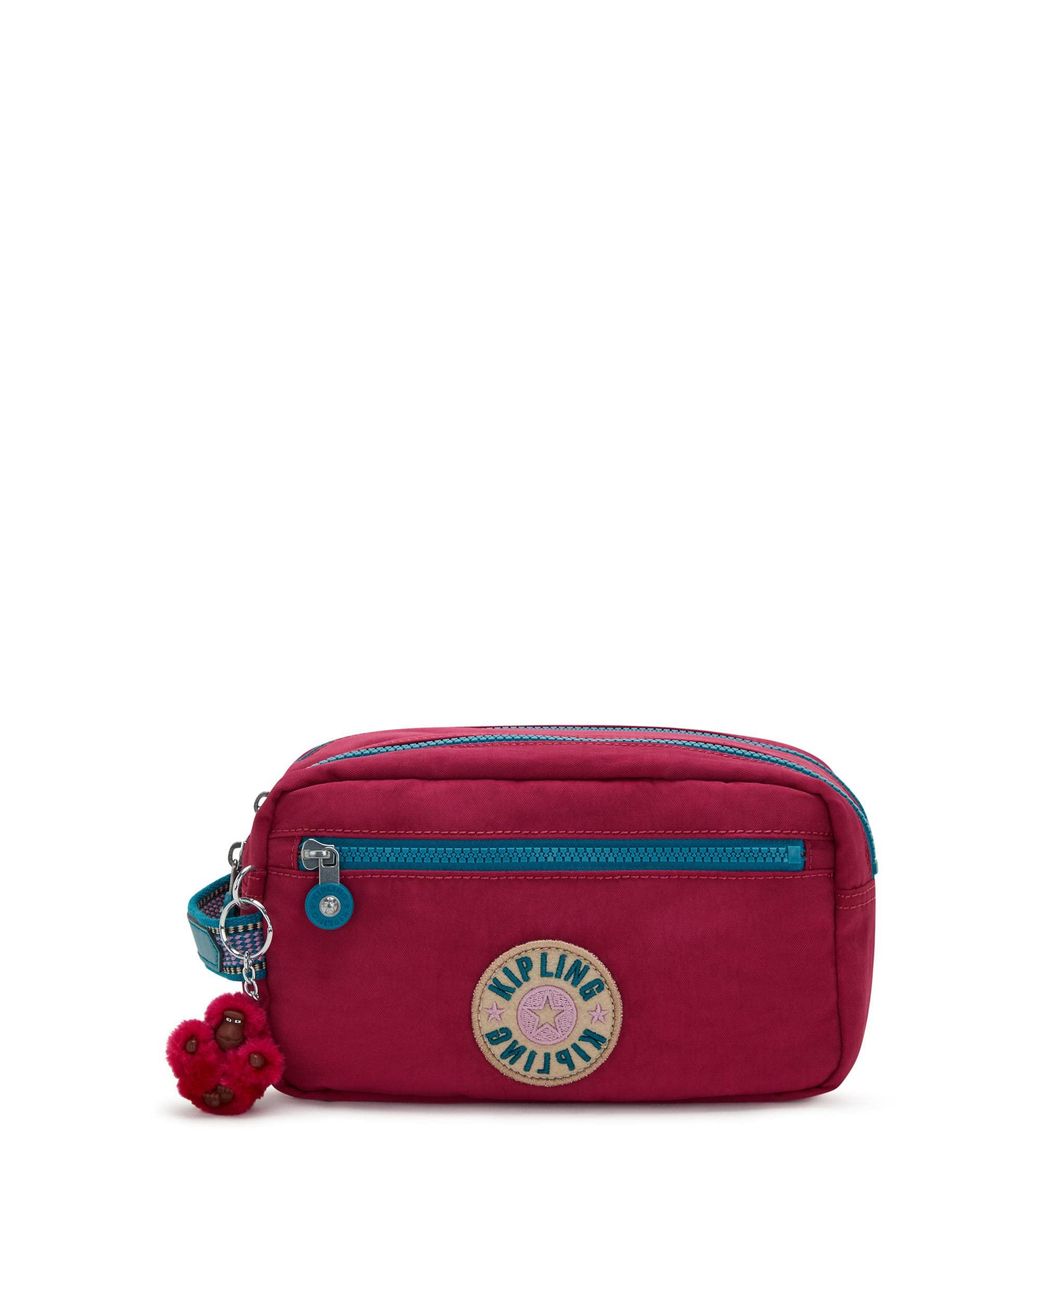 Kipling Amalfi Toiletry Bag Raspberry Dream Wb in Red | Lyst UK